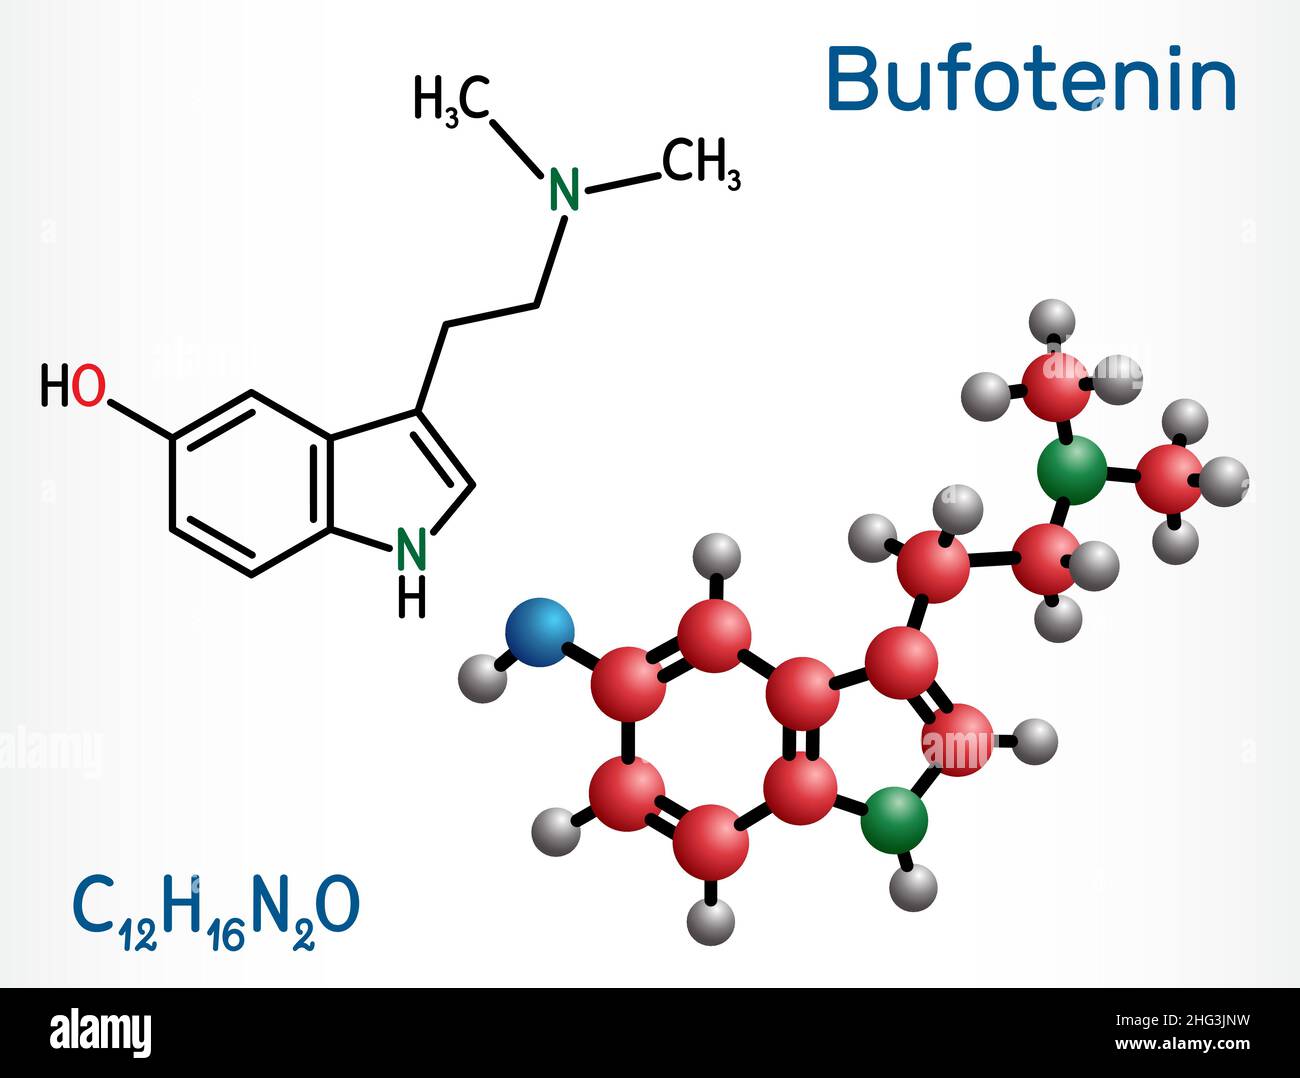 Bufotenin, 5-HO-DMT, bufotenine molecule. It is alkaloid, tryptamine derivative, hallucinogenic serotonin analog, found in toad skins, mushrooms. Stru Stock Vector